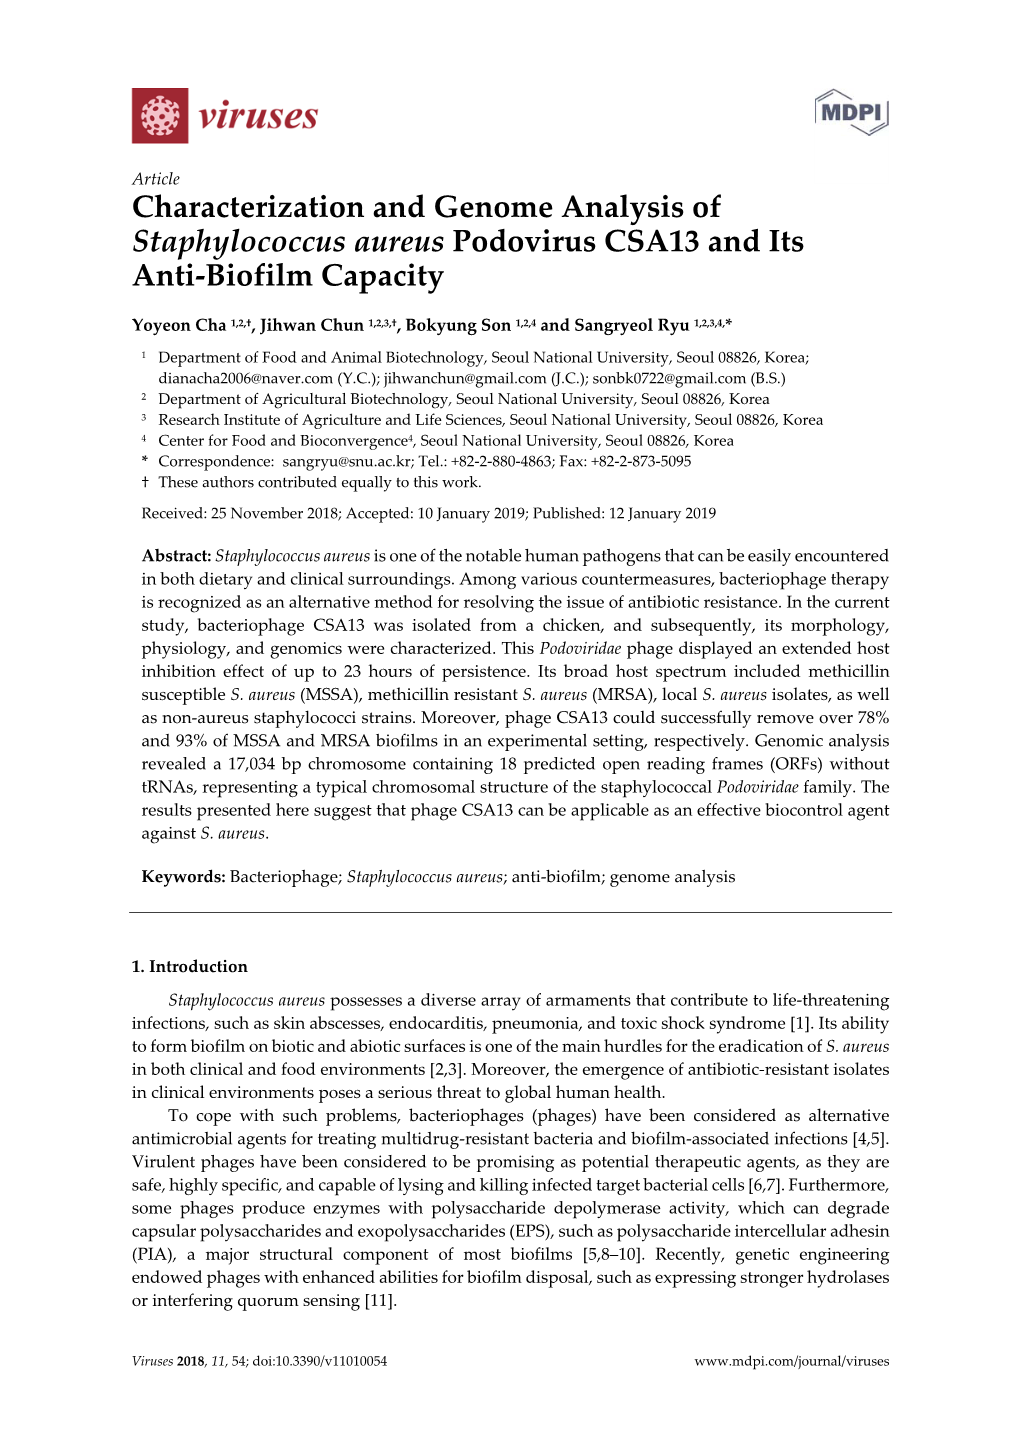 Characterization and Genome Analysis of Staphylococcus Aureus Podovirus CSA13 and Its Anti‐Biofilm Capacity